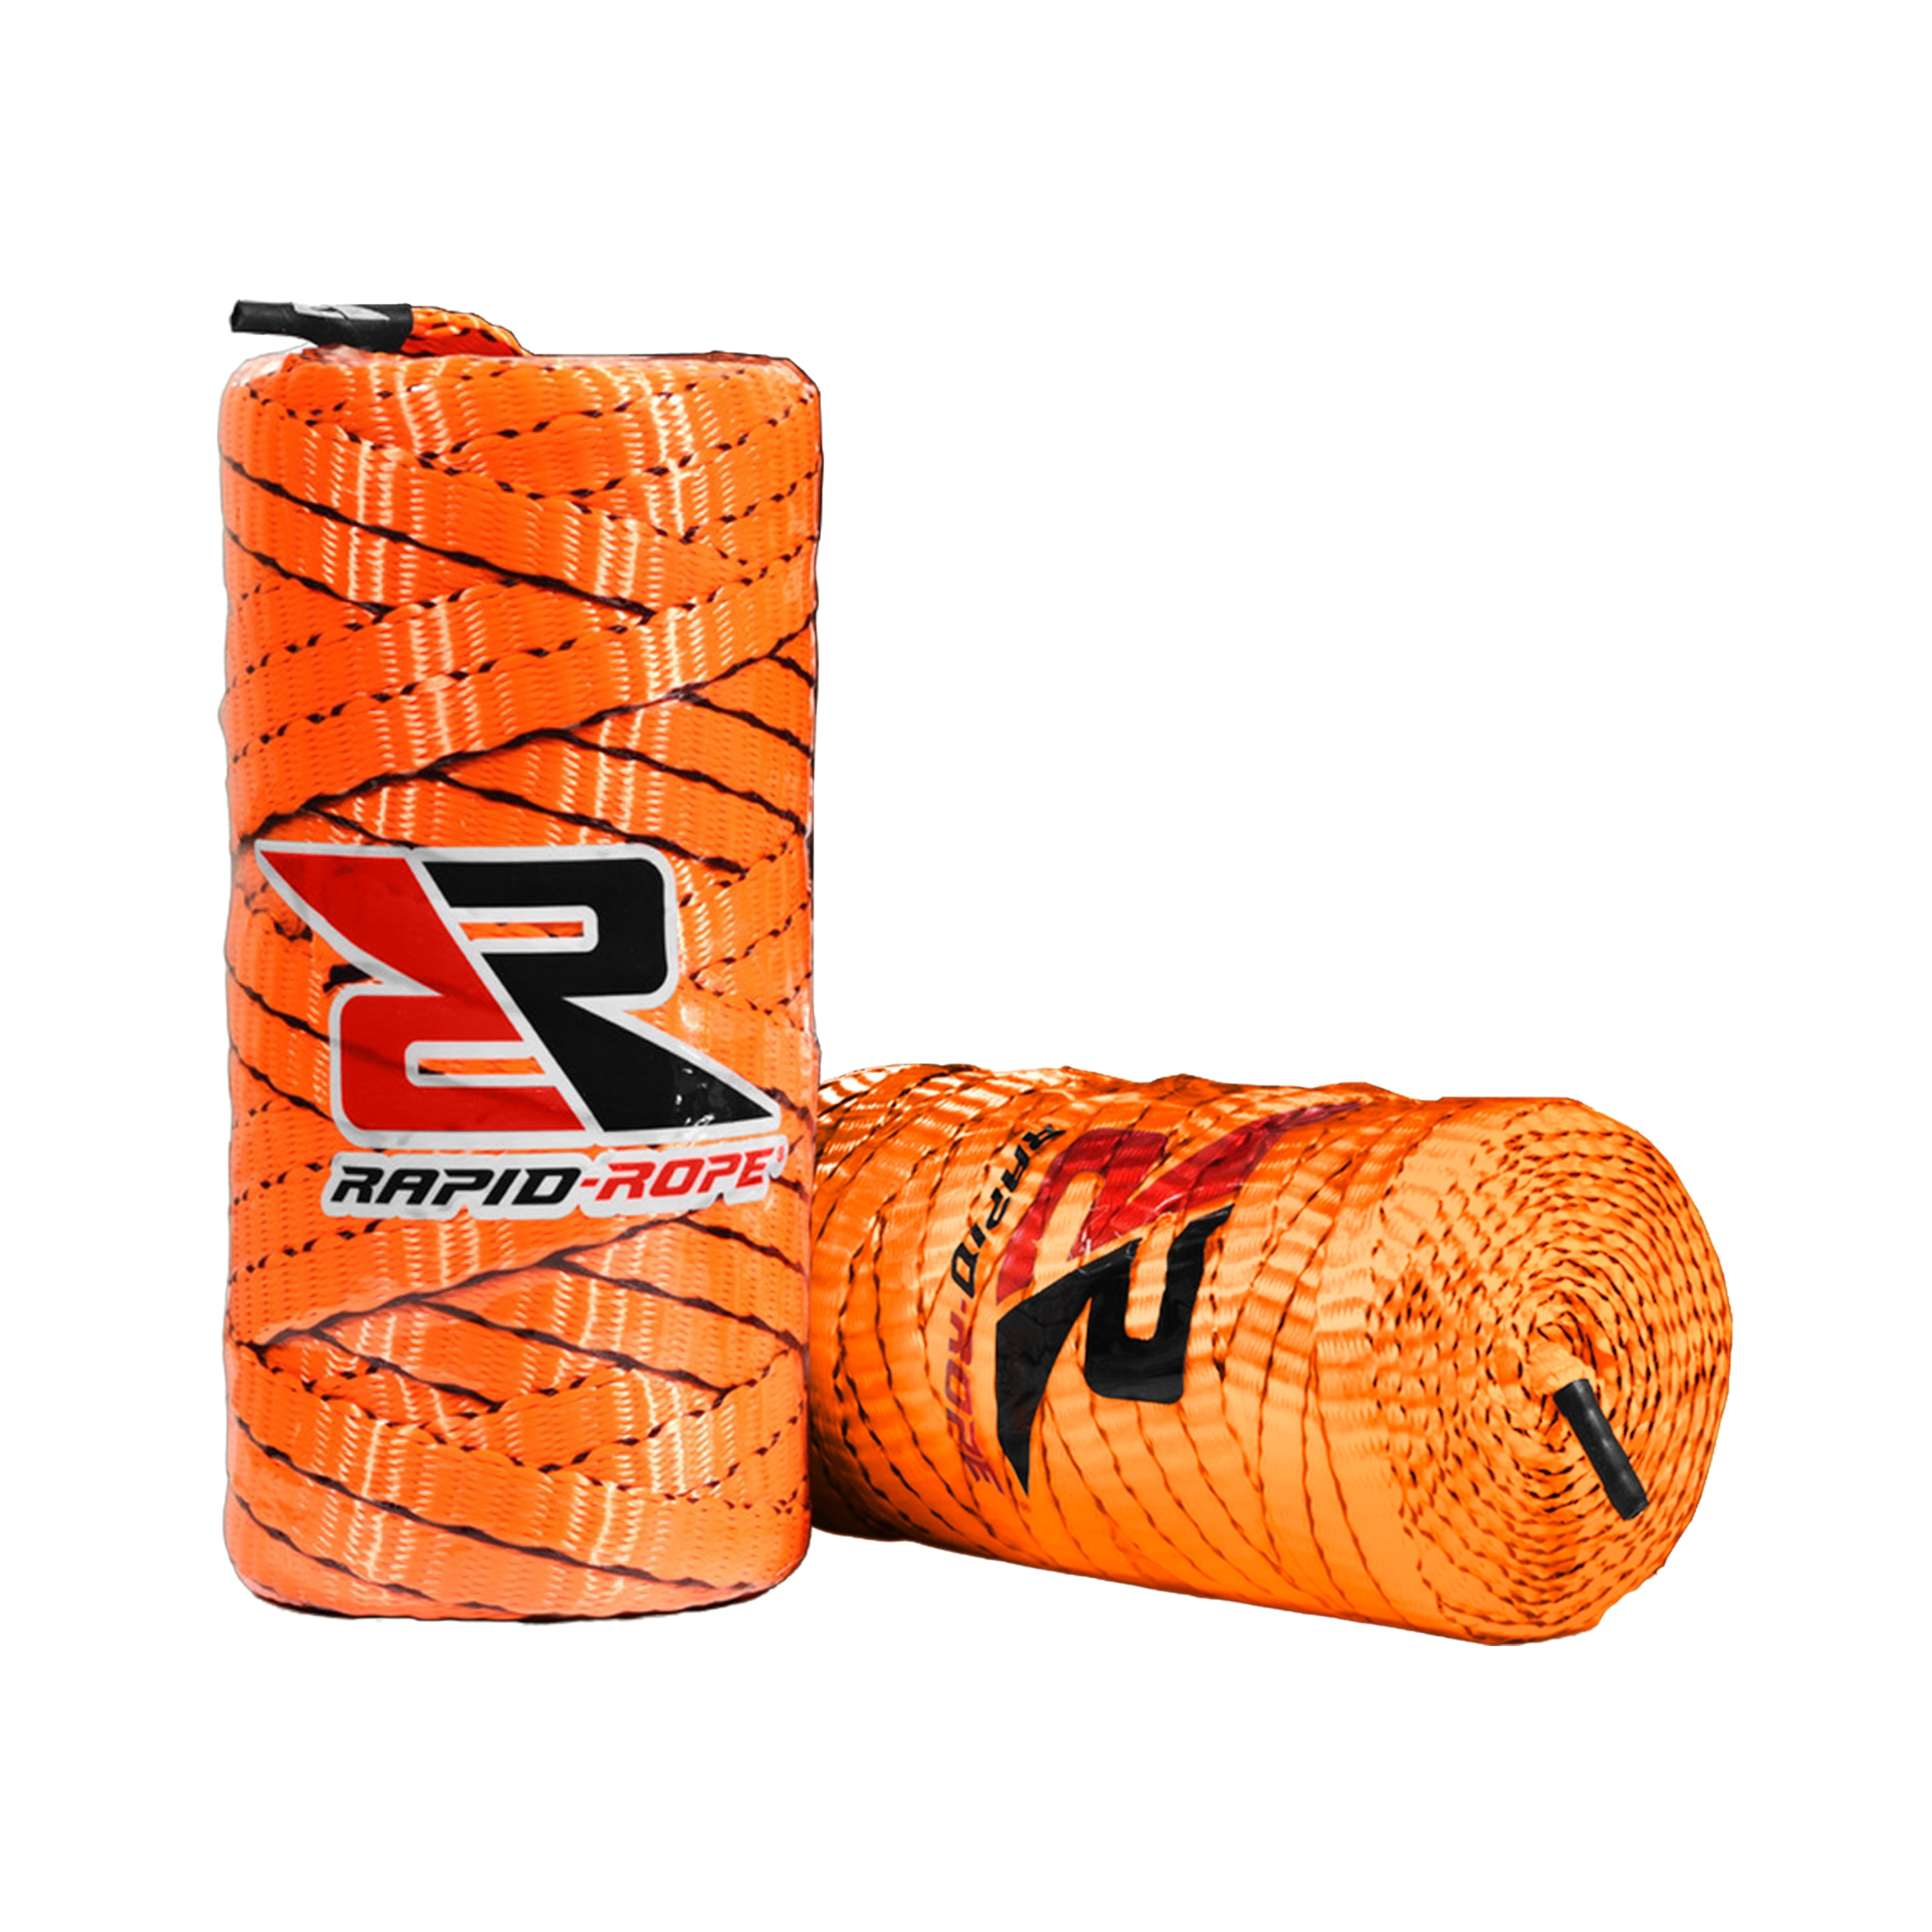 Rapid Rope Refill for Canister, Multipurpose Paracord Alternative, 2pk  Orange 